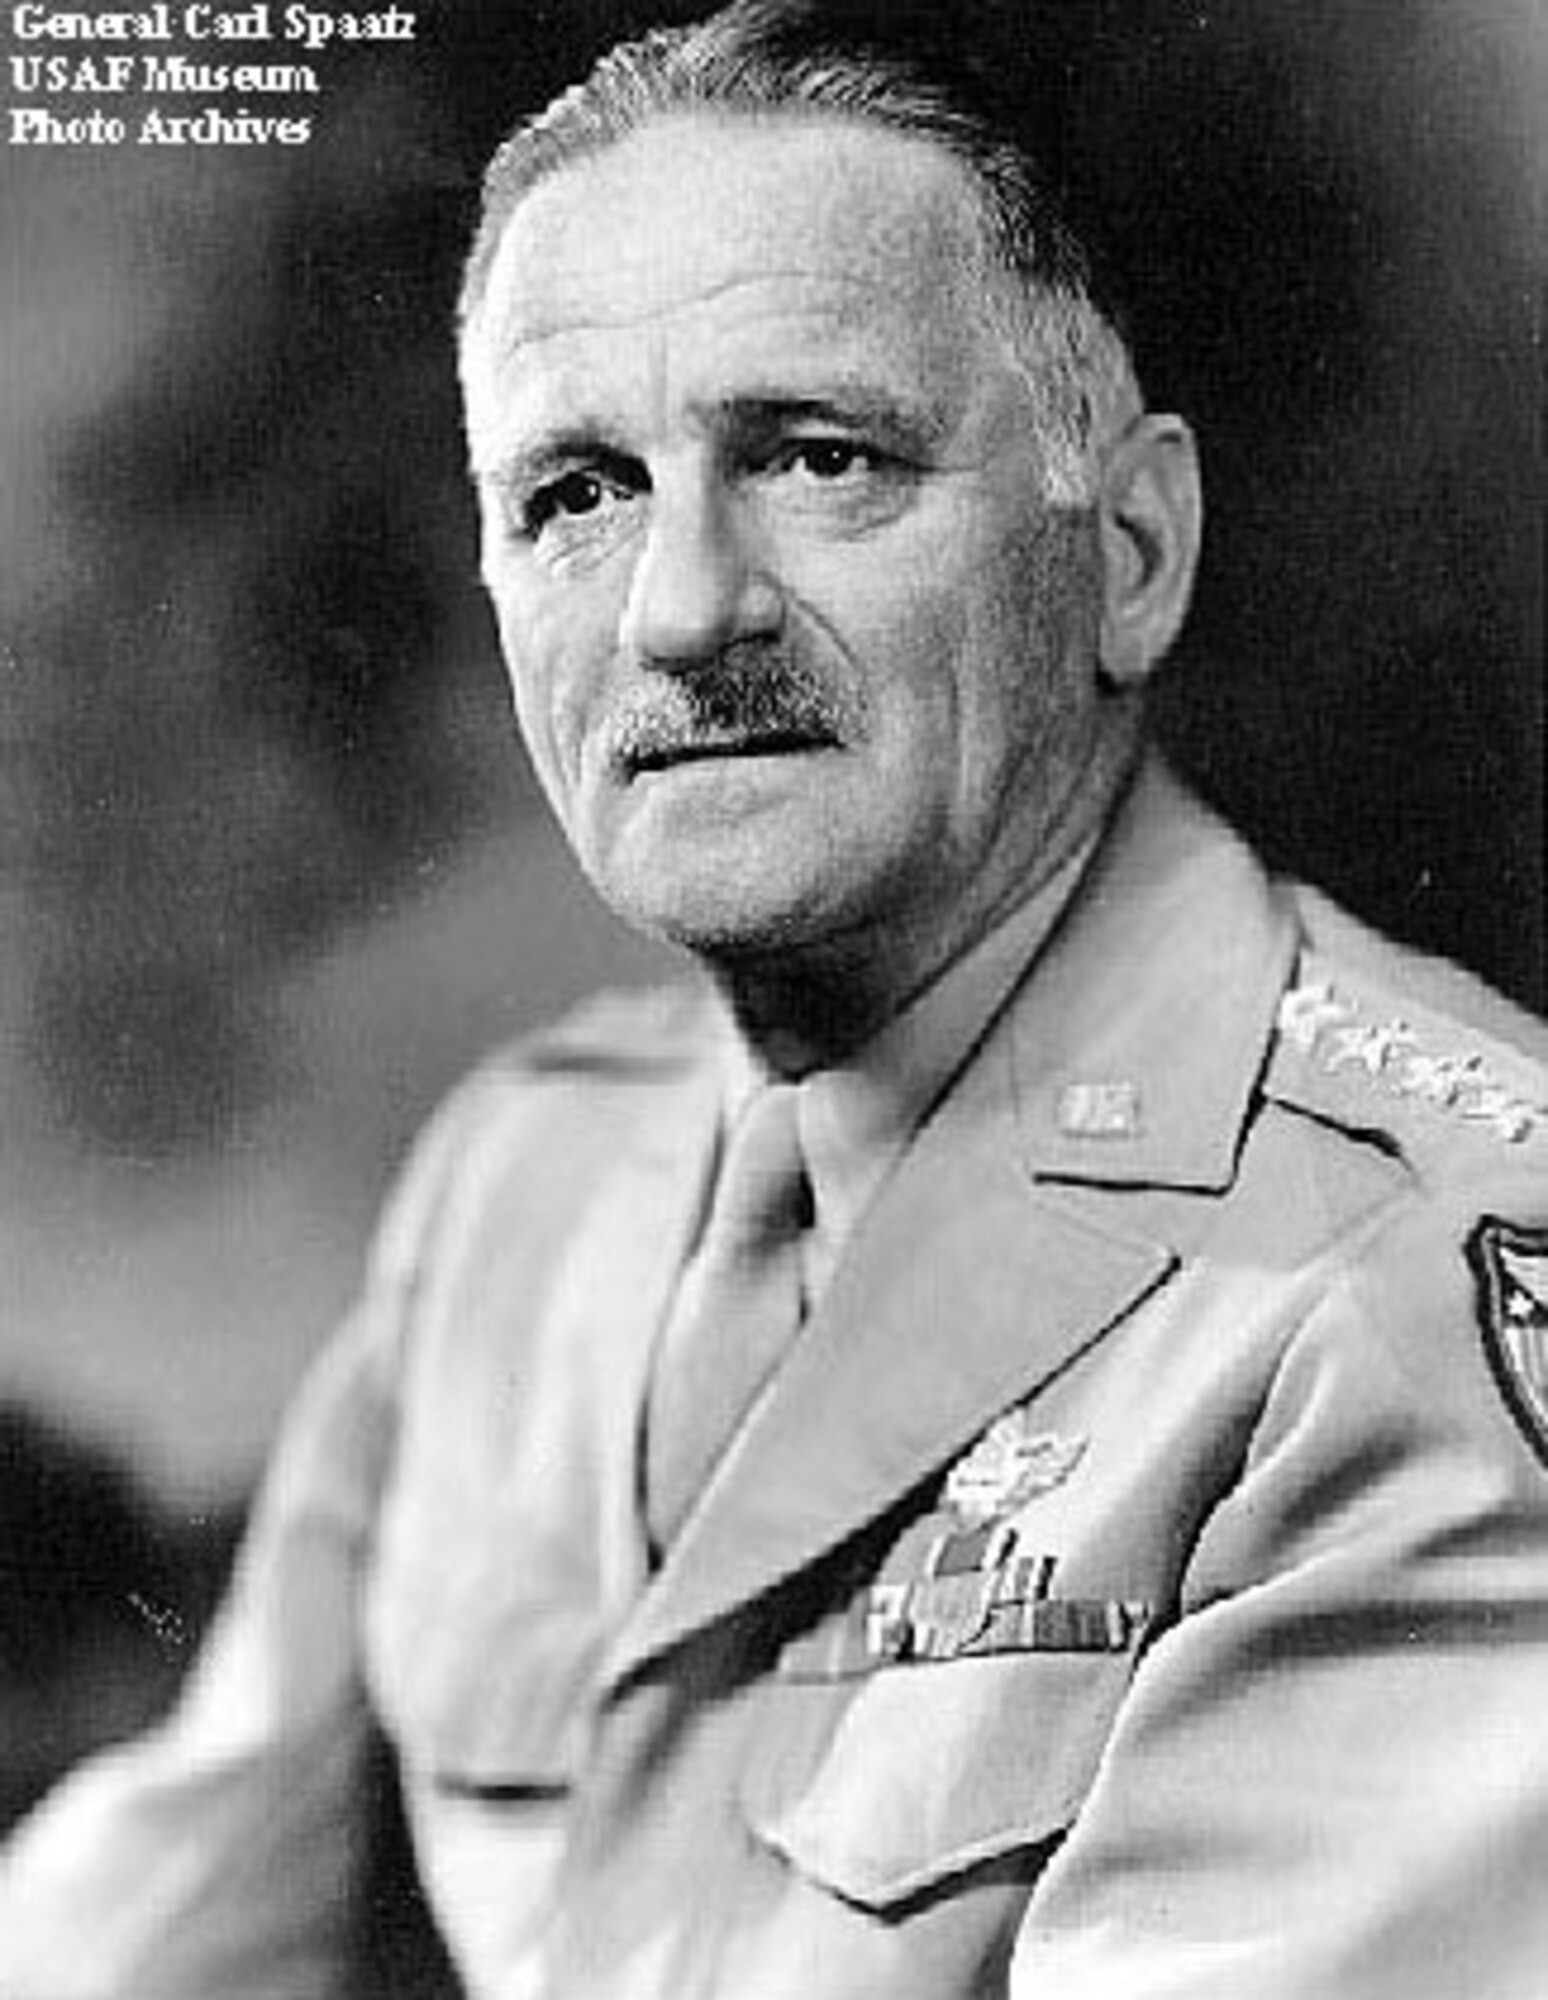 Gen. Carl Spaatz. (U.S. Air Force photo)